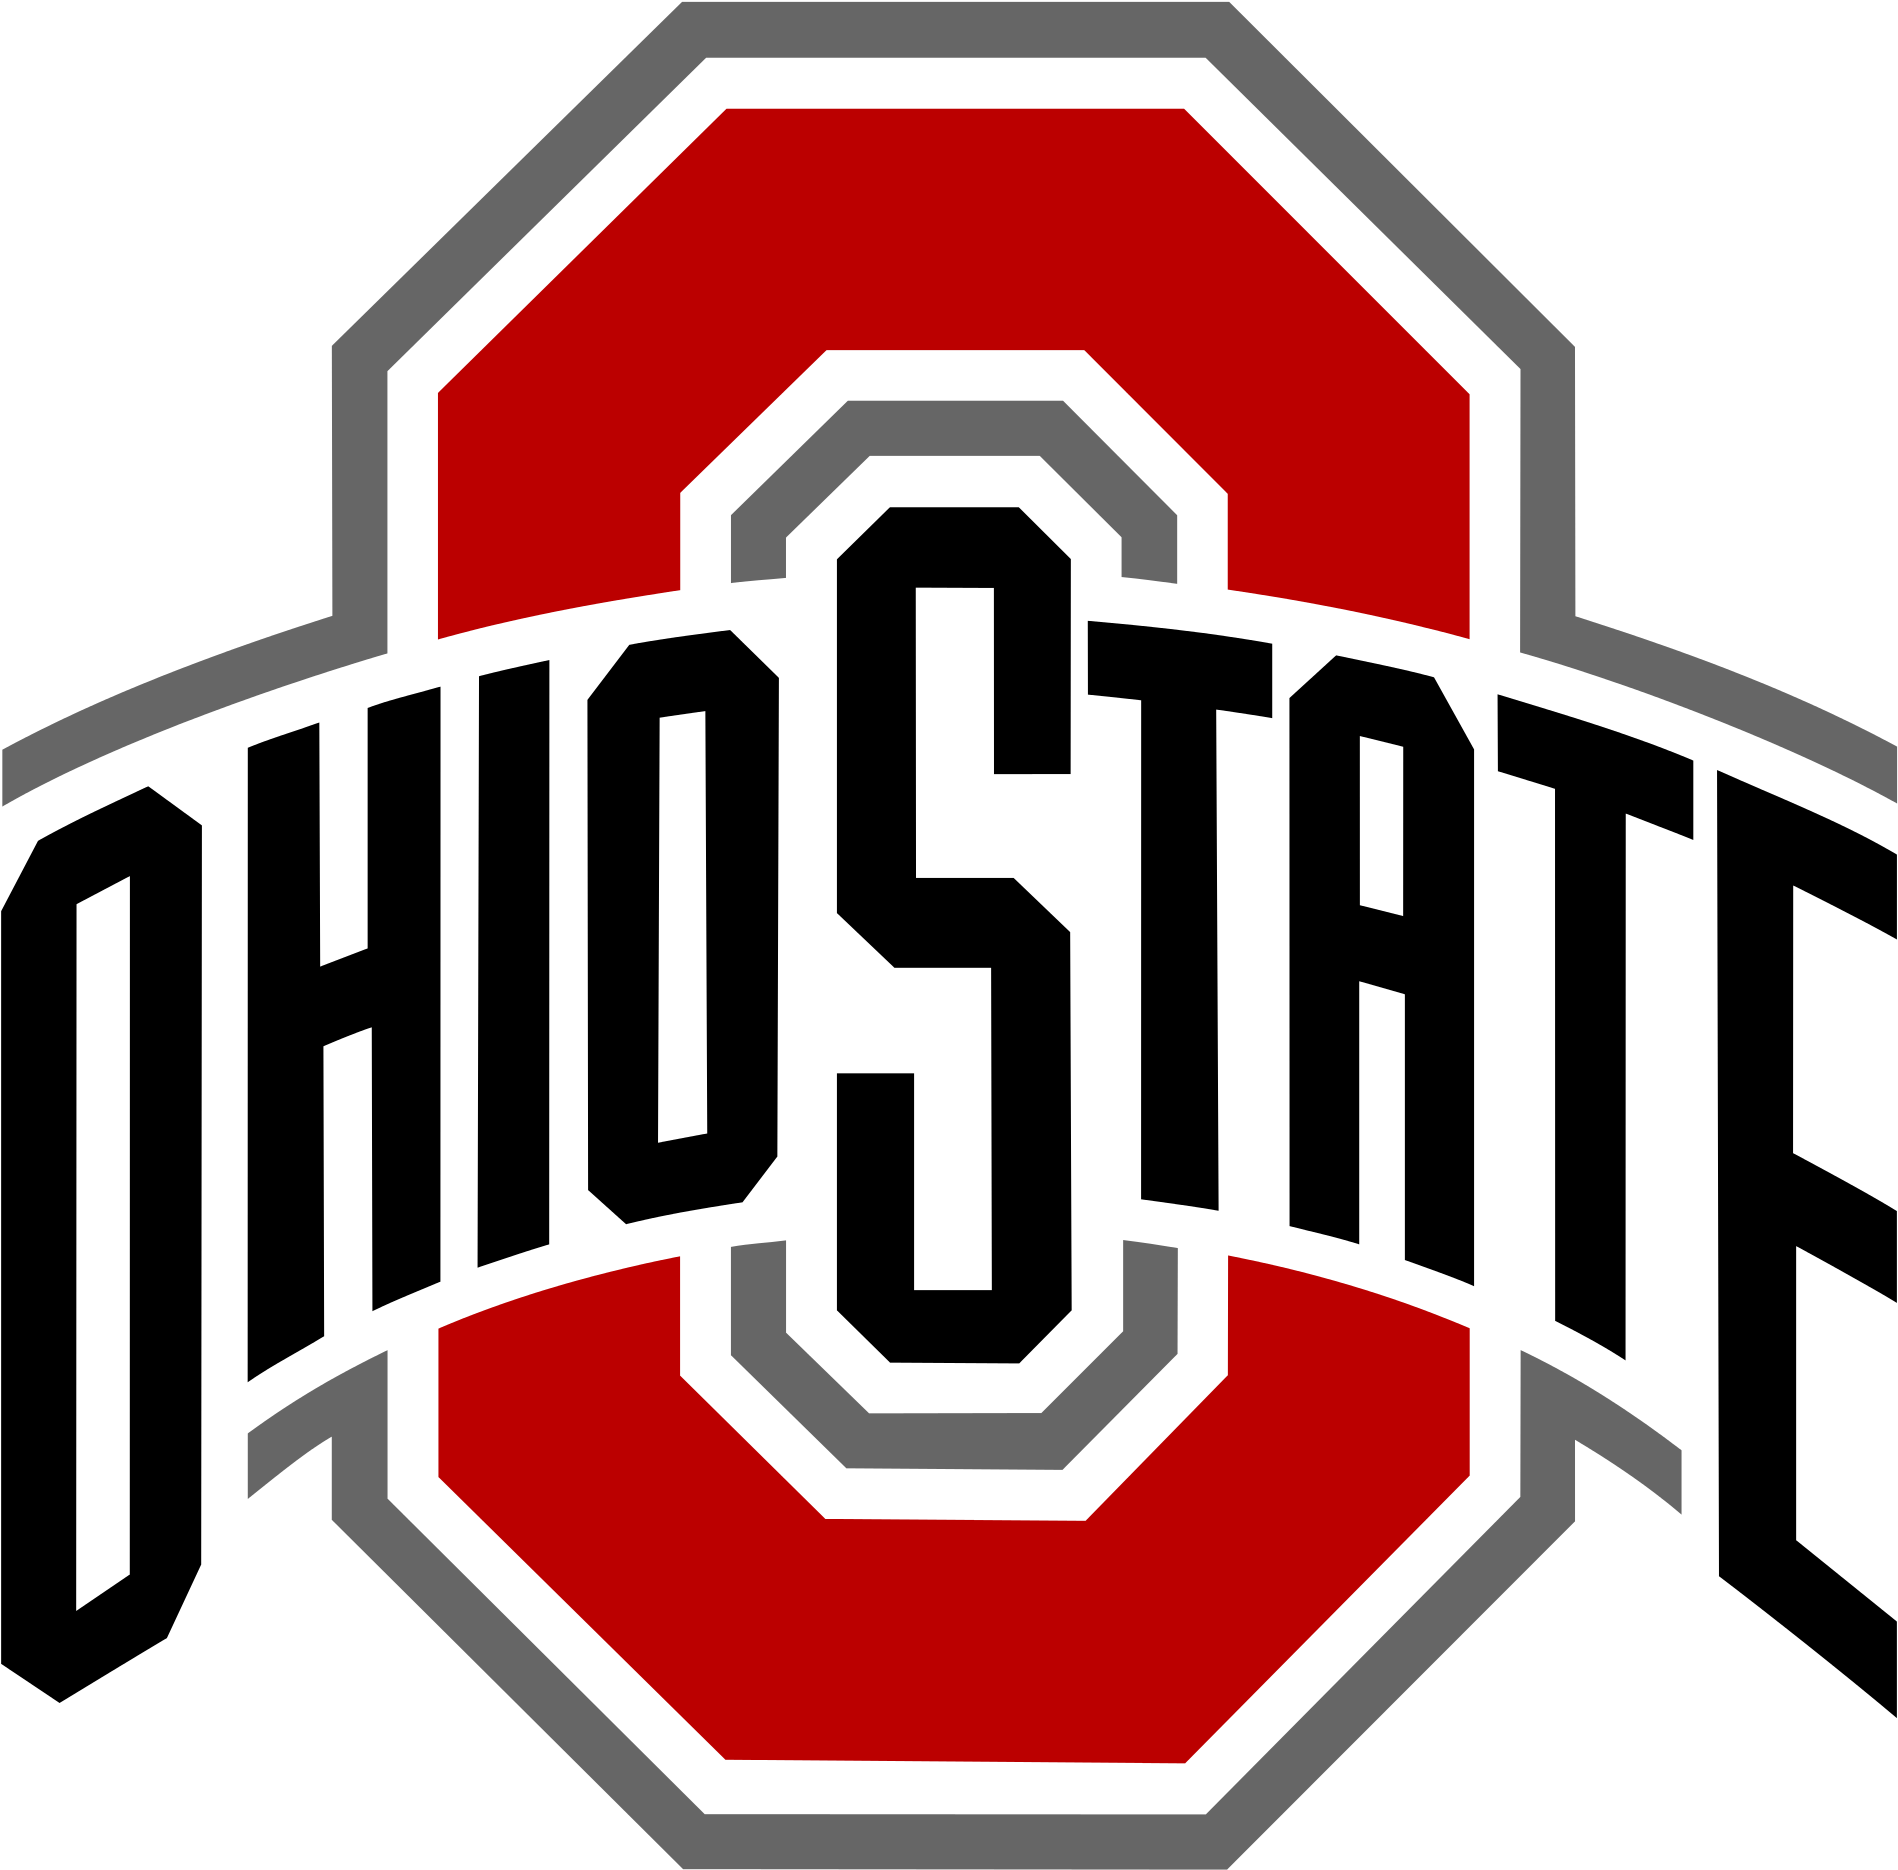 Top 10 College Football Programs - Ohio State Buckeyes (2000x1969)